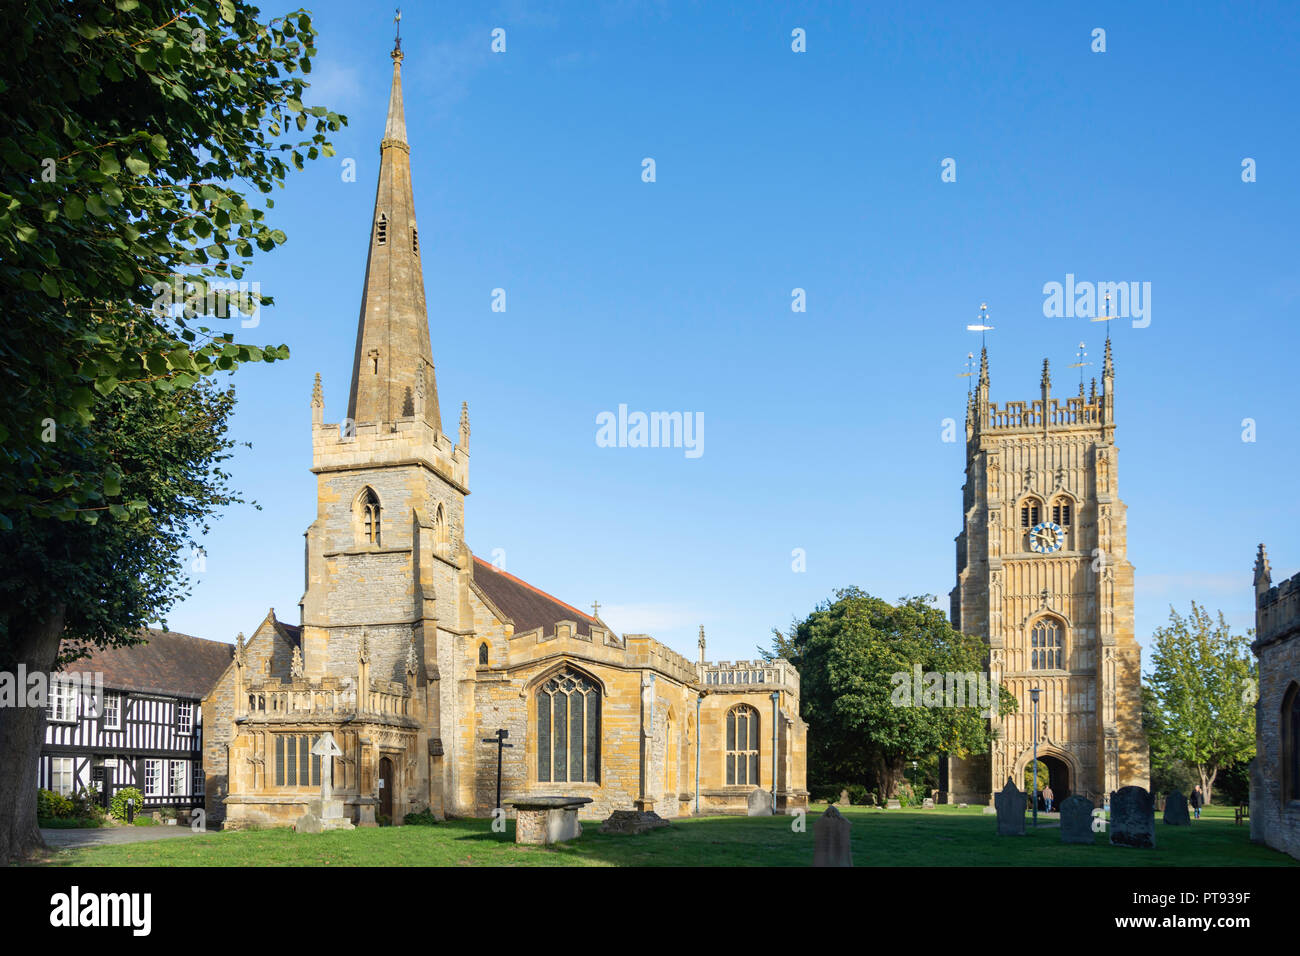 All Saints Parish Church and Bell Tower, Evesham Abbey, Evesham, Worcestershire, England, United Kingdom Stock Photo